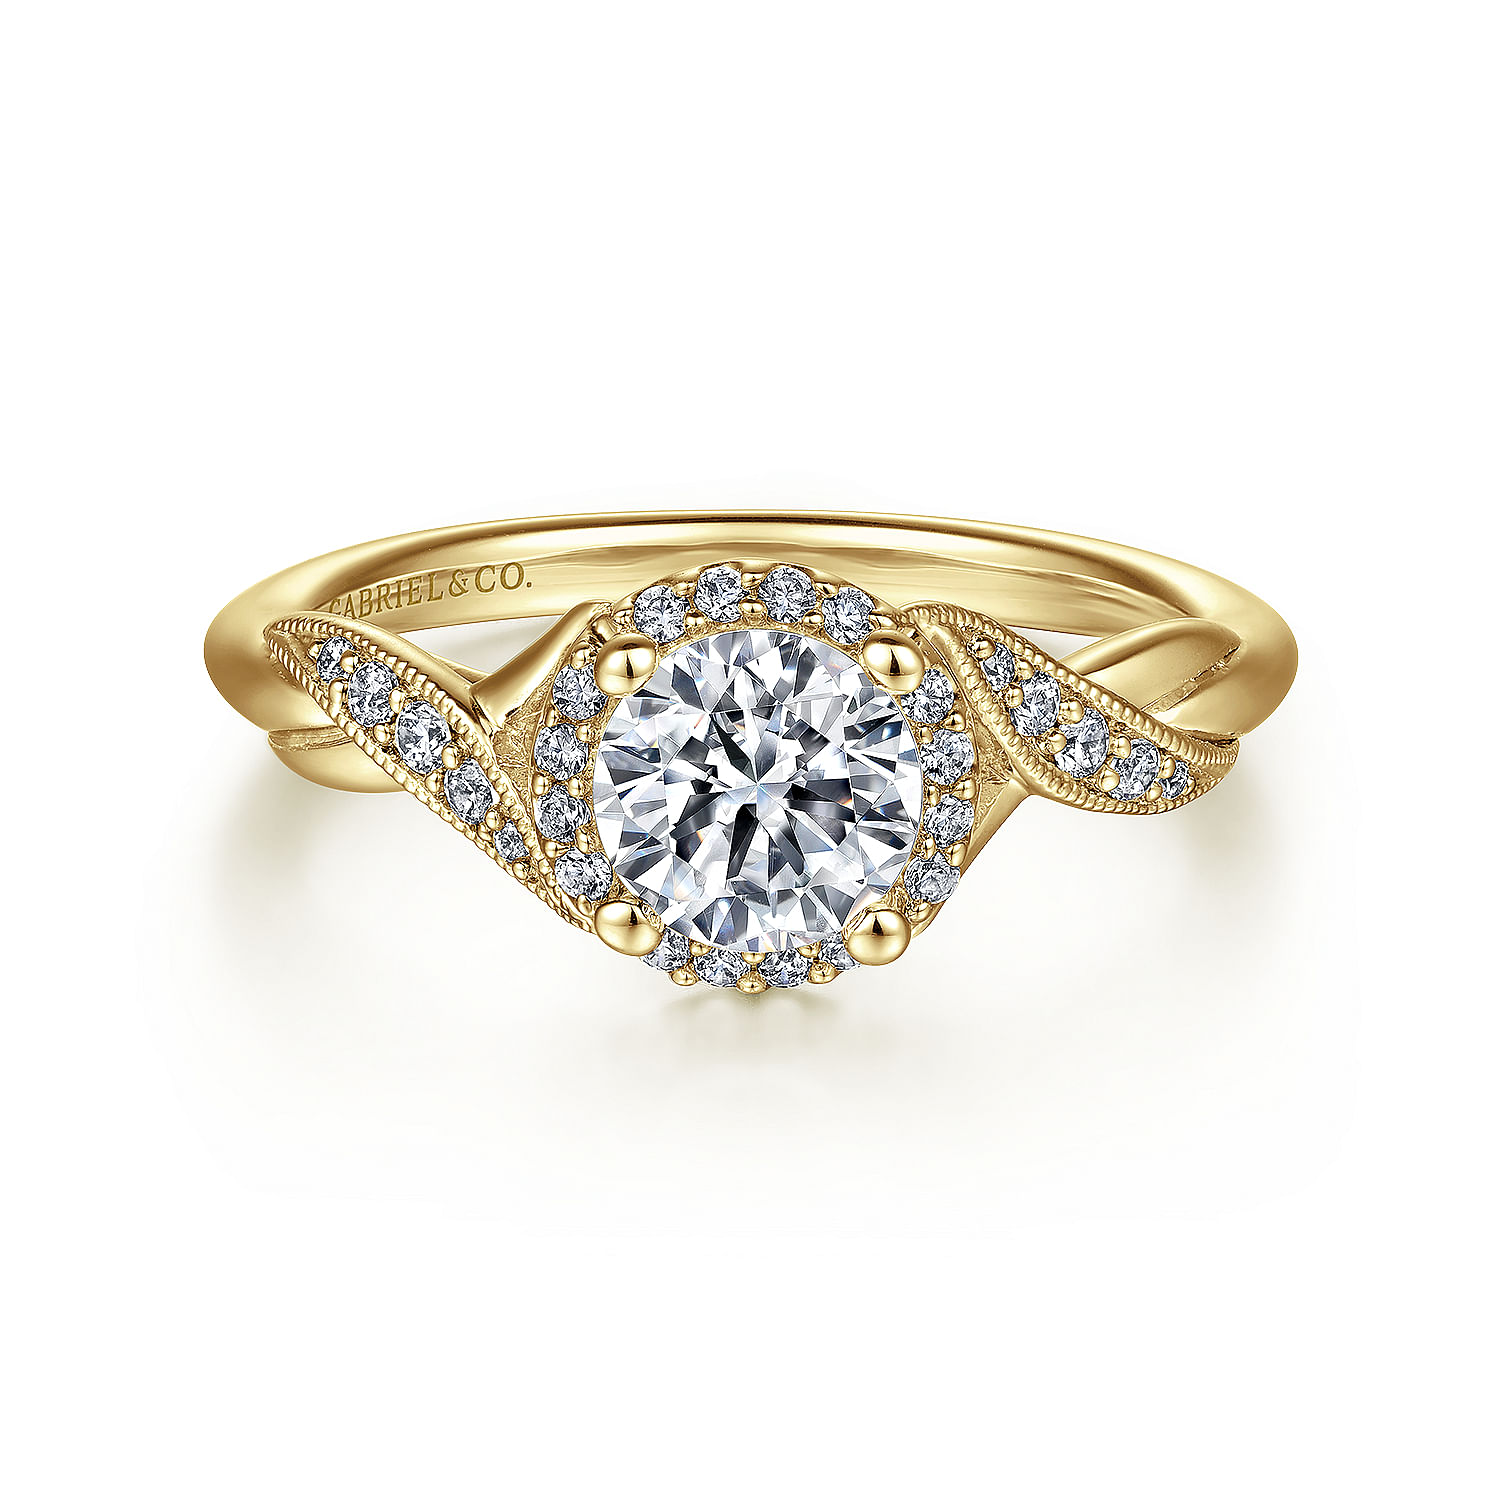 Shae - Vintage Inspired 14K Yellow Gold Round Halo Diamond Engagement Ring